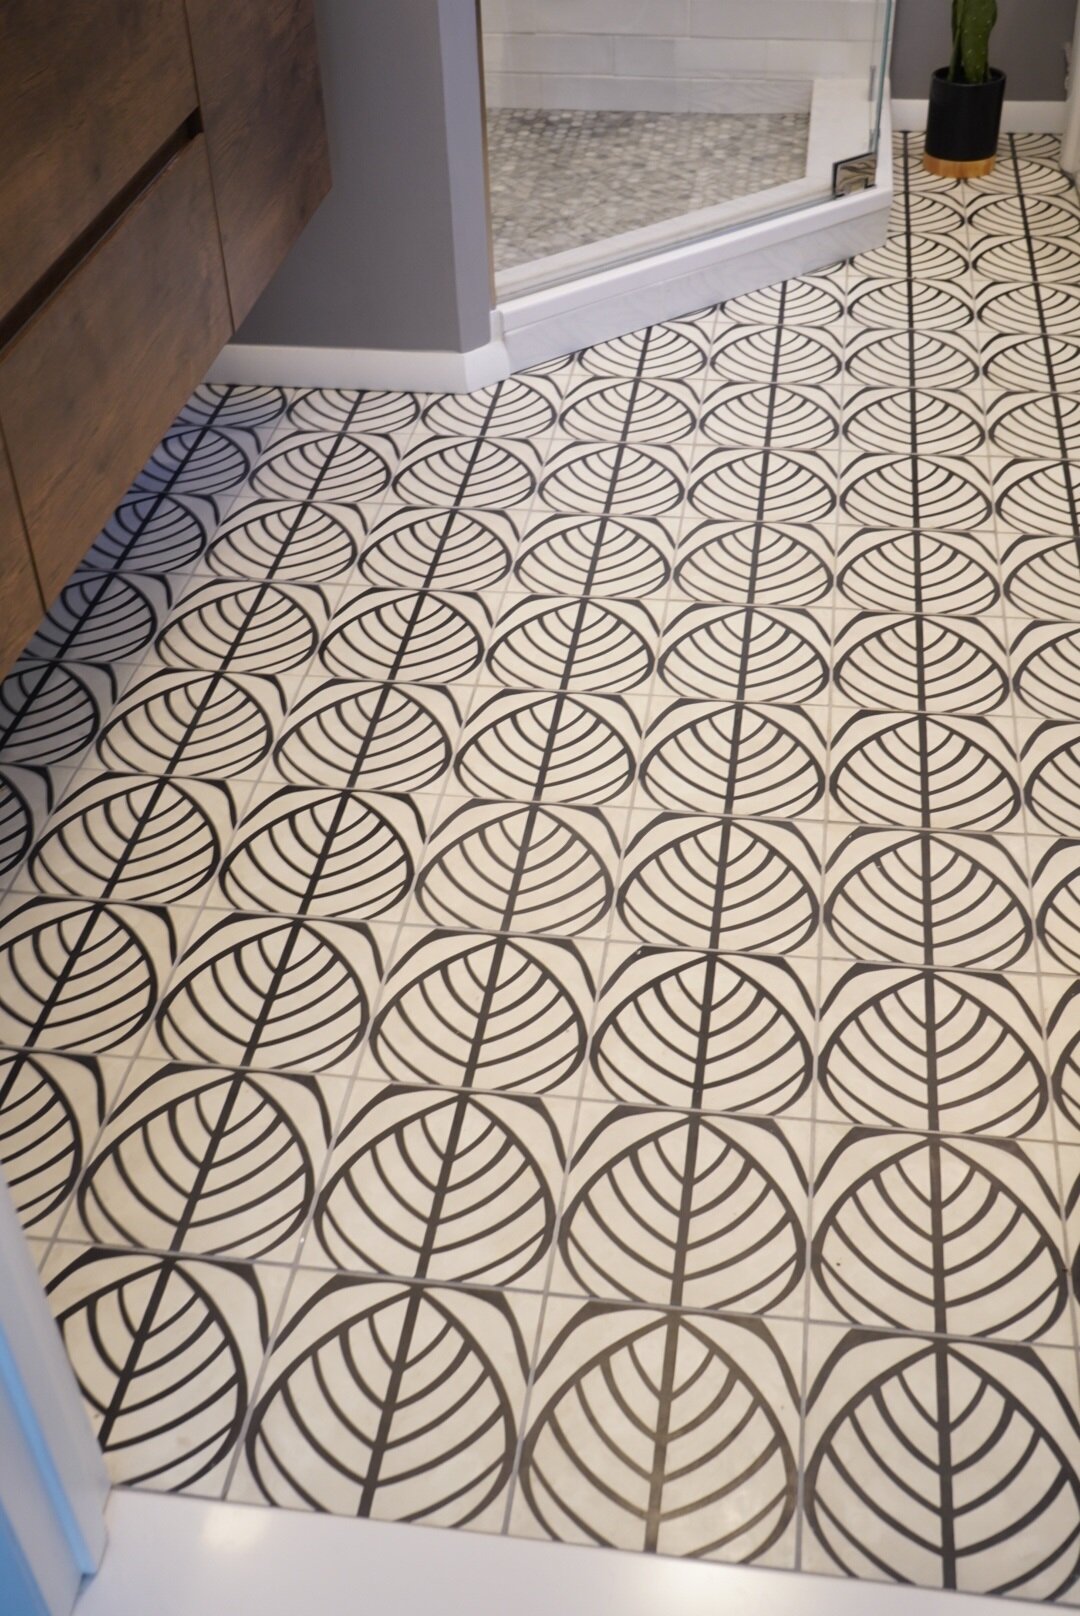 4 ANAN Cement Tile Floor.jpg